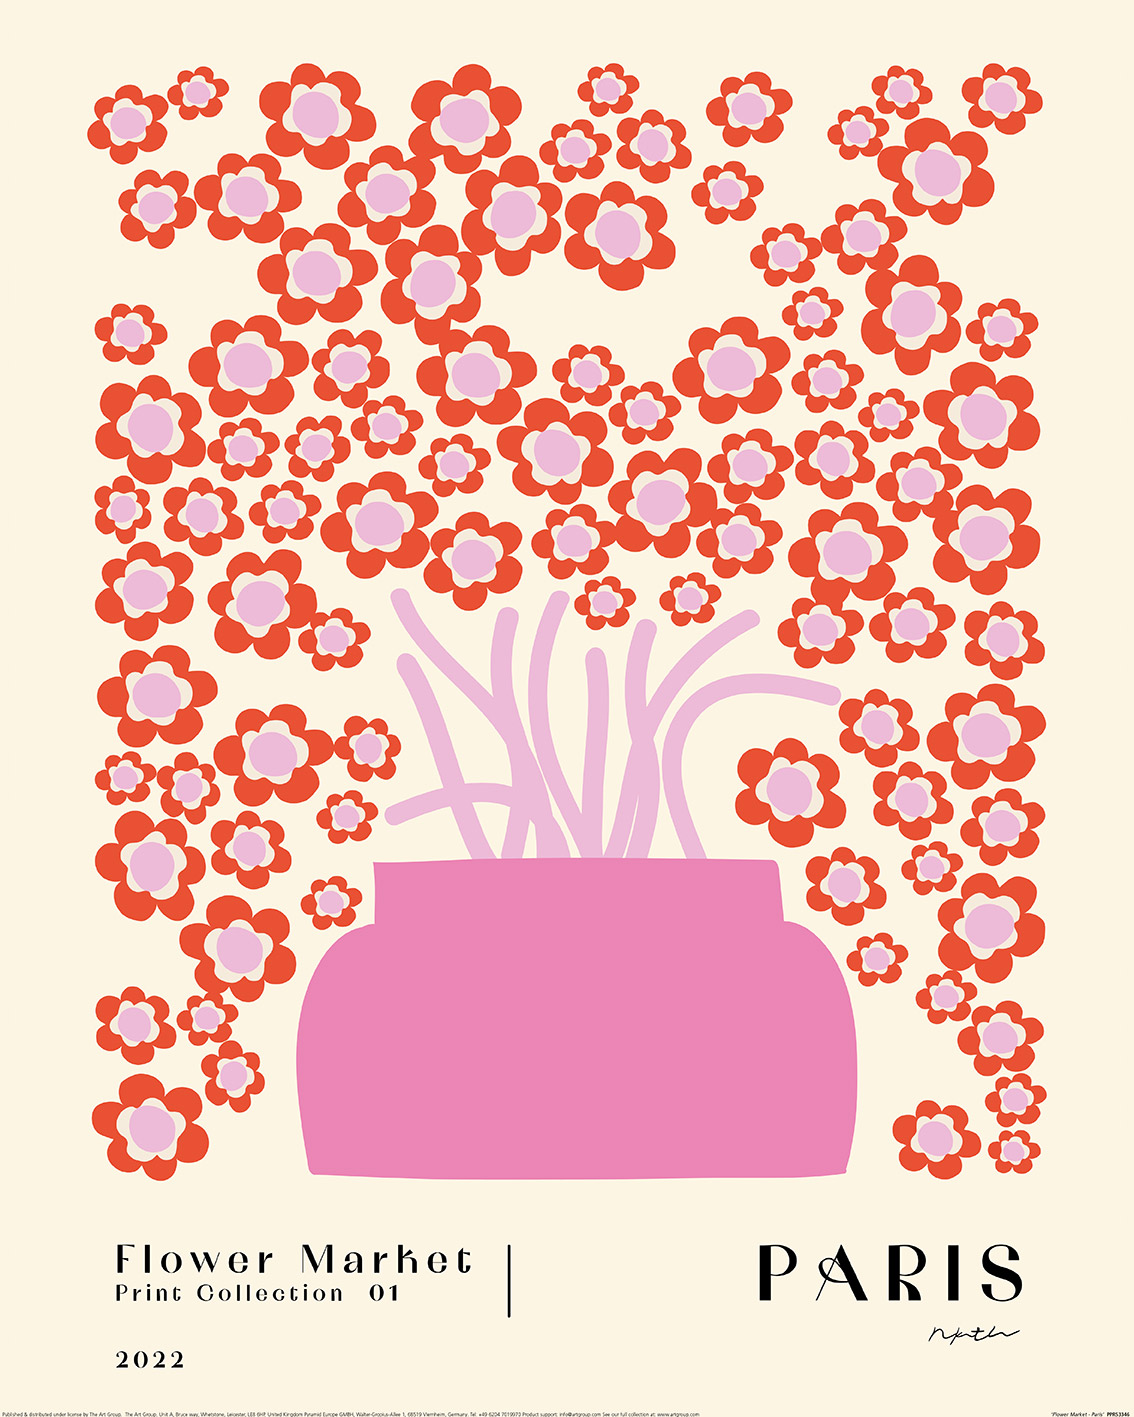 NKTN (Flower Market - Paris) Art Prints